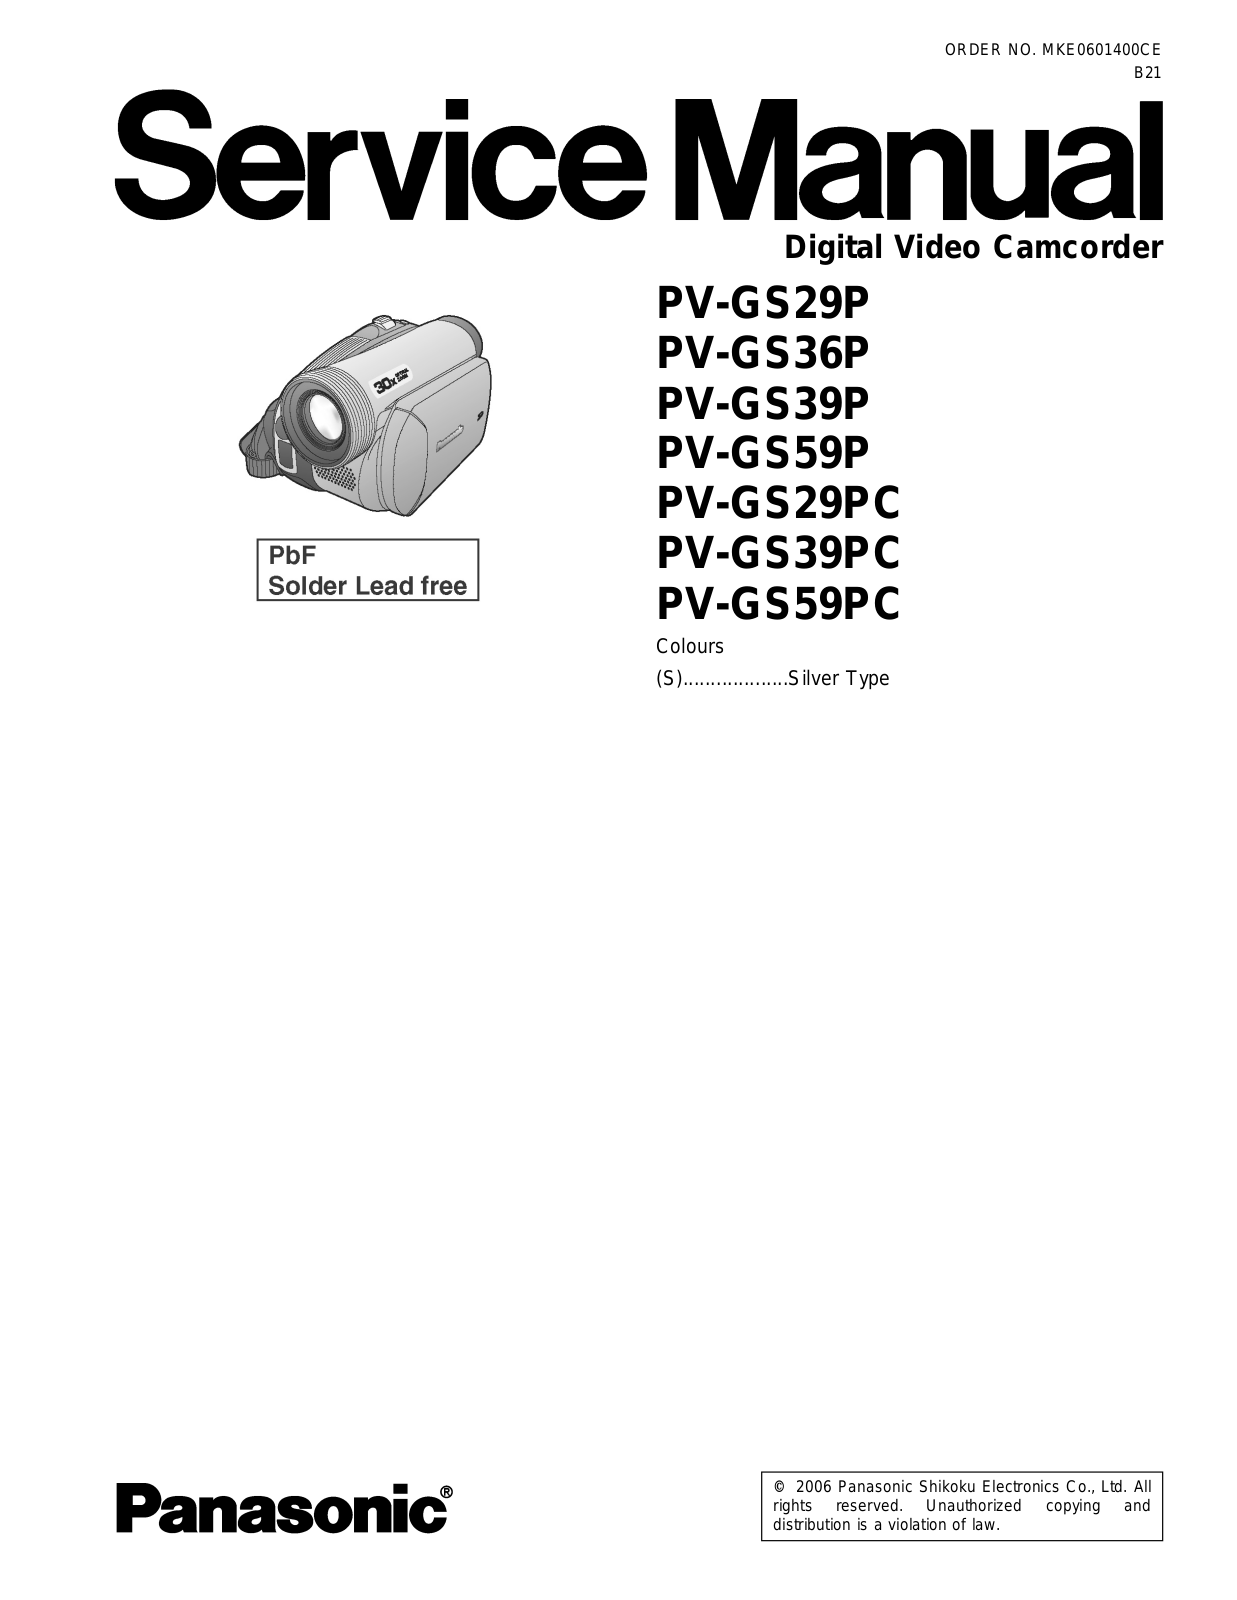 panasonic PV-GS29P, PV-GS36P, PV-GS39P, PV-GS59P, PV-GS29PC Service Manual